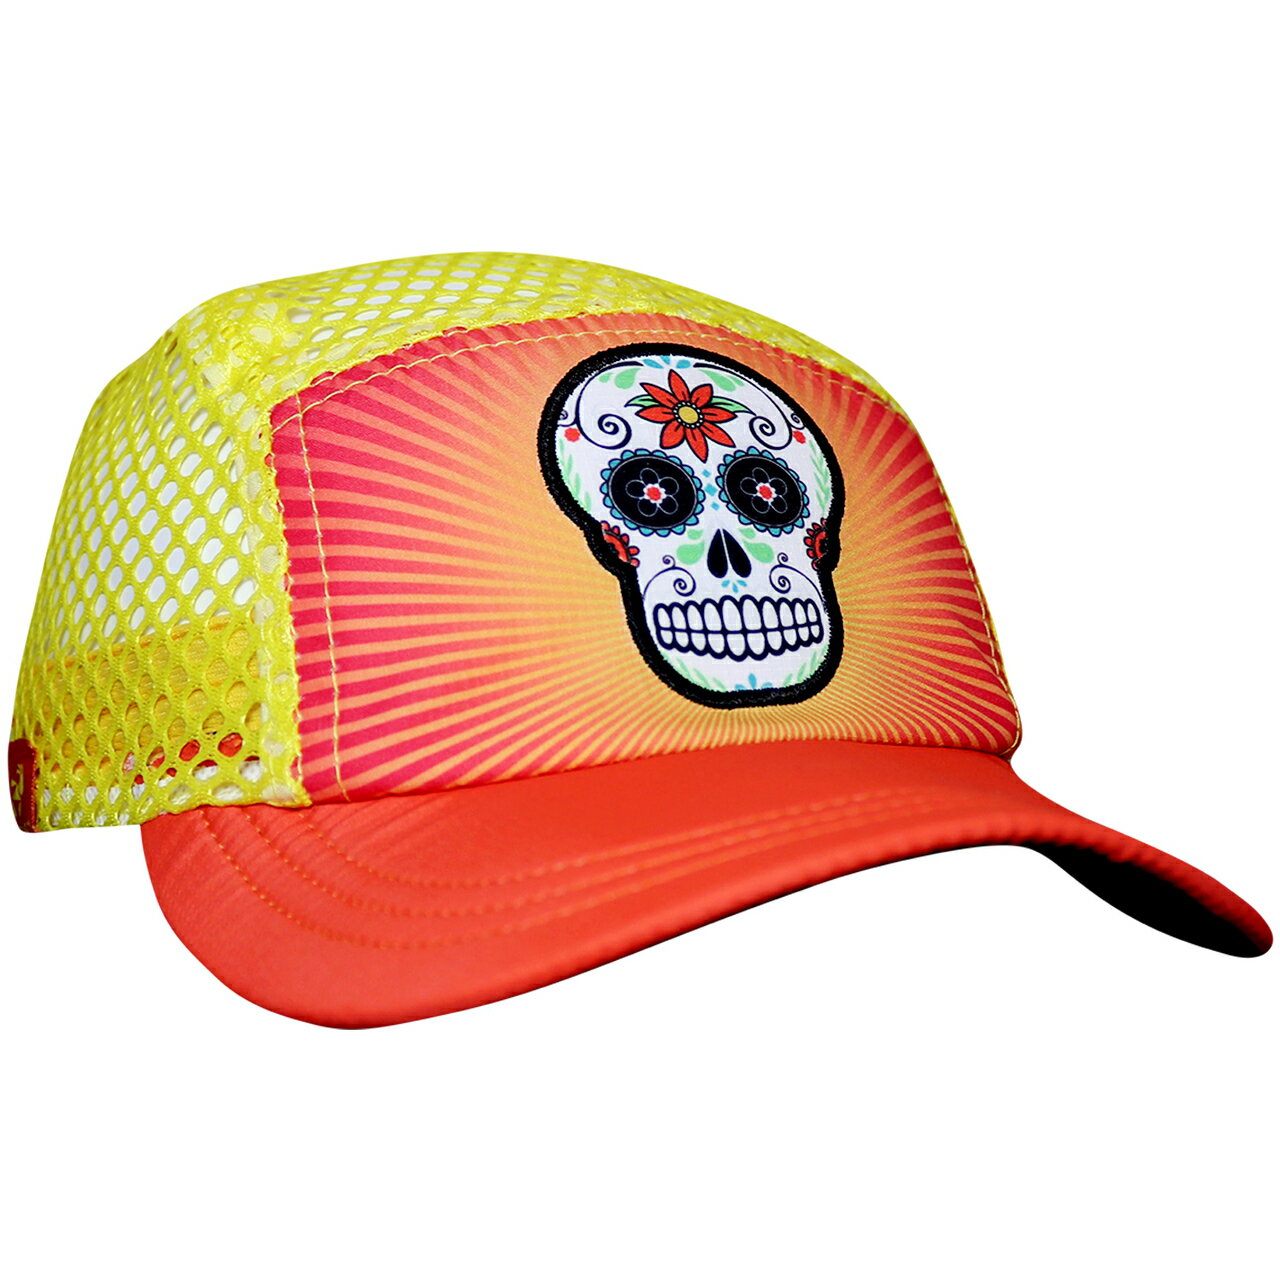 Orange Sugar Skull摺疊收納方便軟檐帽汗淂HEADSWEATS運動帽.另推薦由4支回收寶特瓶製成運動衣.